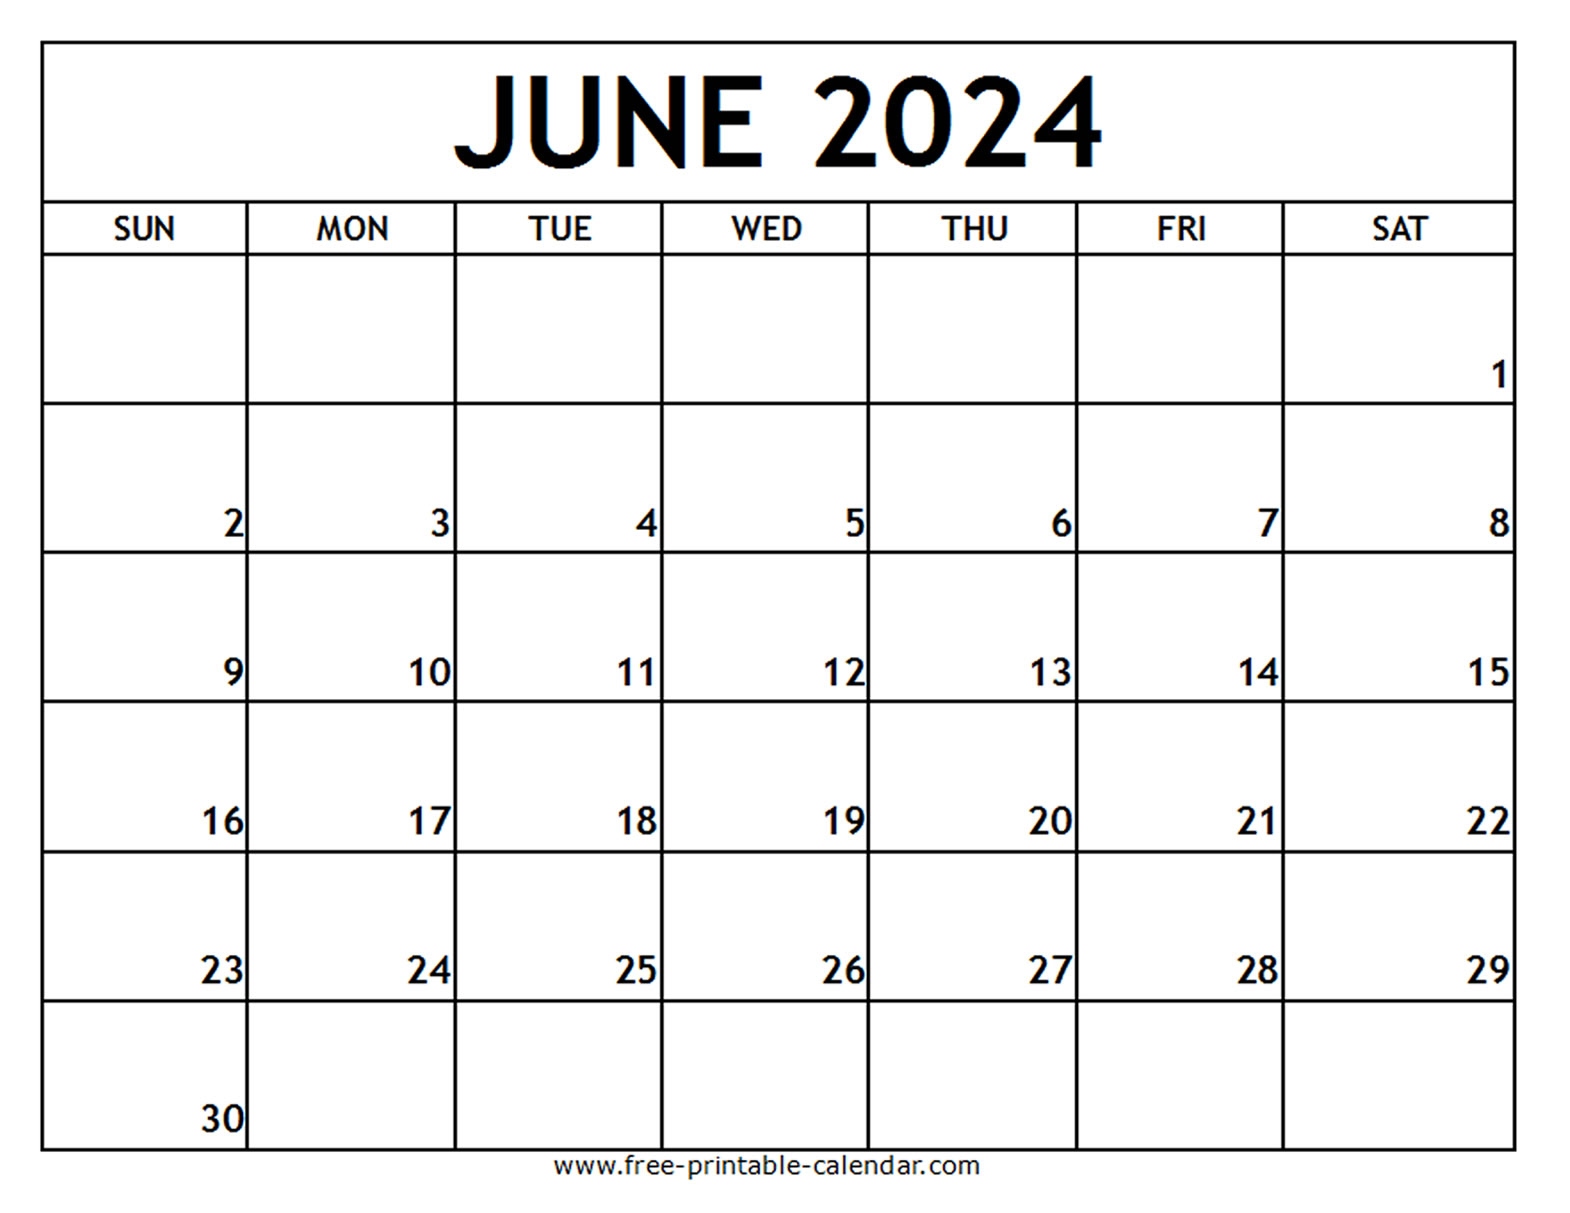 June 2024 Printable Calendar - Free-Printable-Calendar regarding Free Printable Blank Calendar June 2024